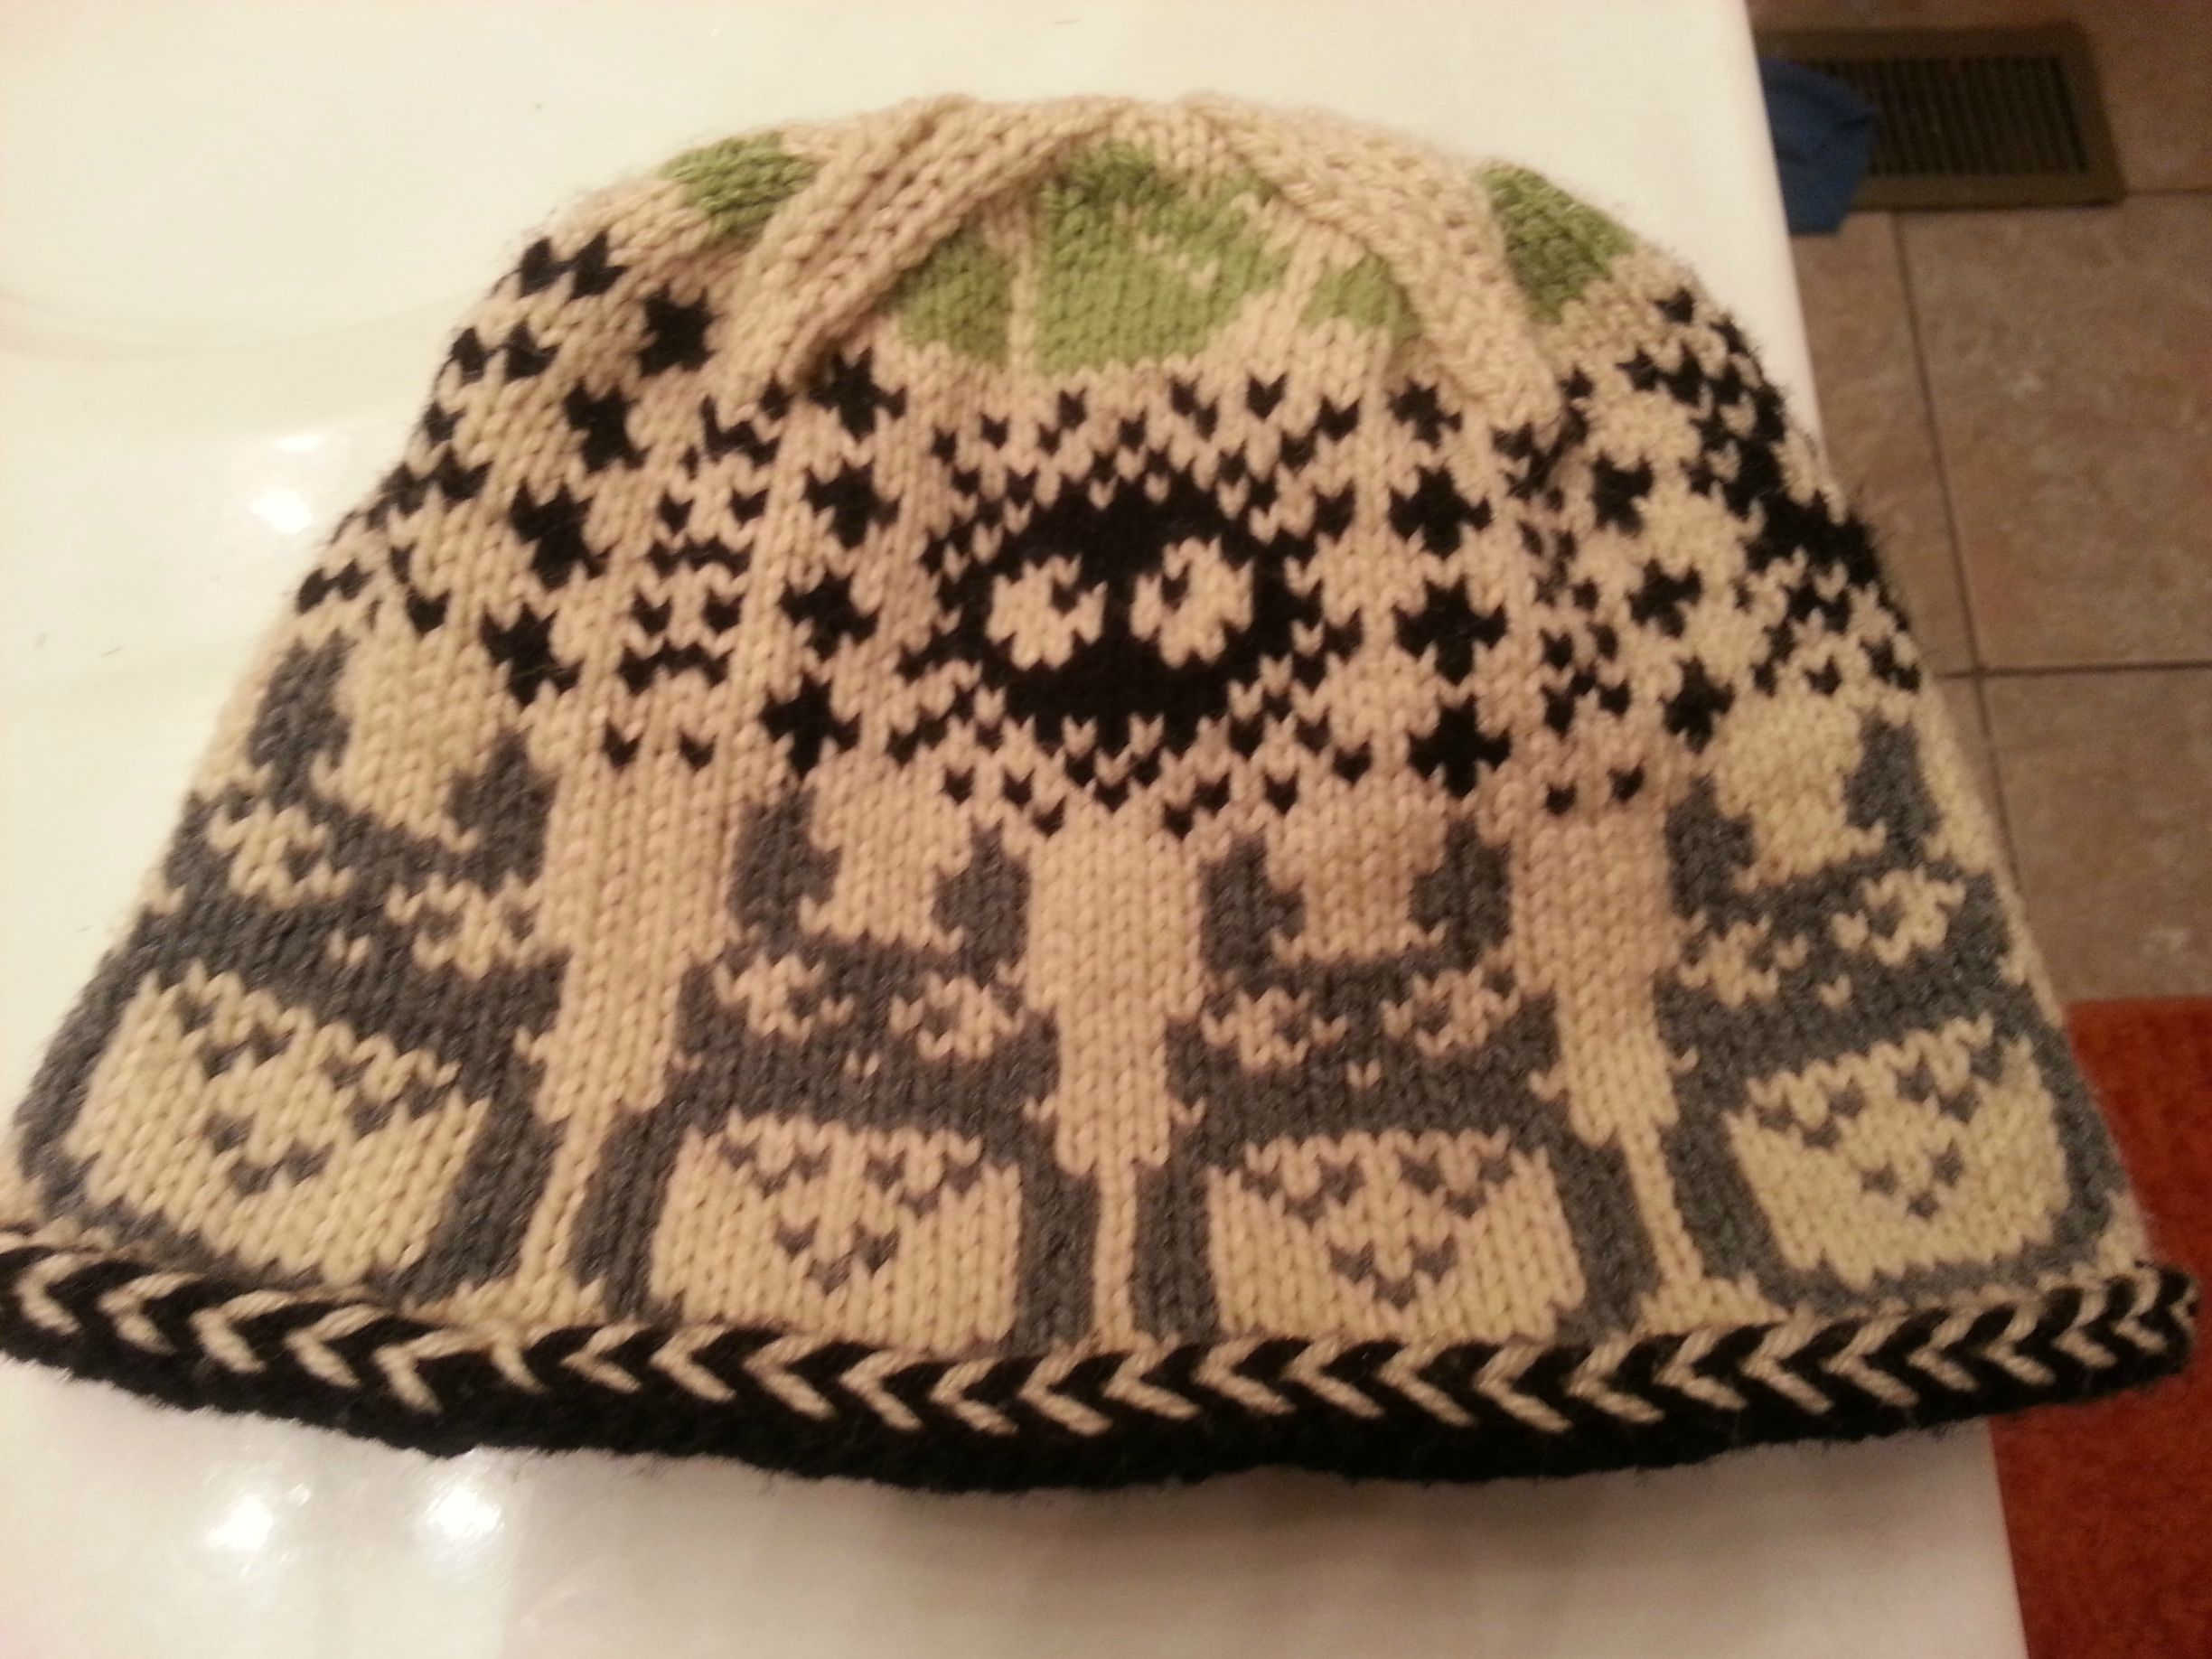 Totoro Crochet Hat Pattern Here Is My Finished Totoro Hat Knitting